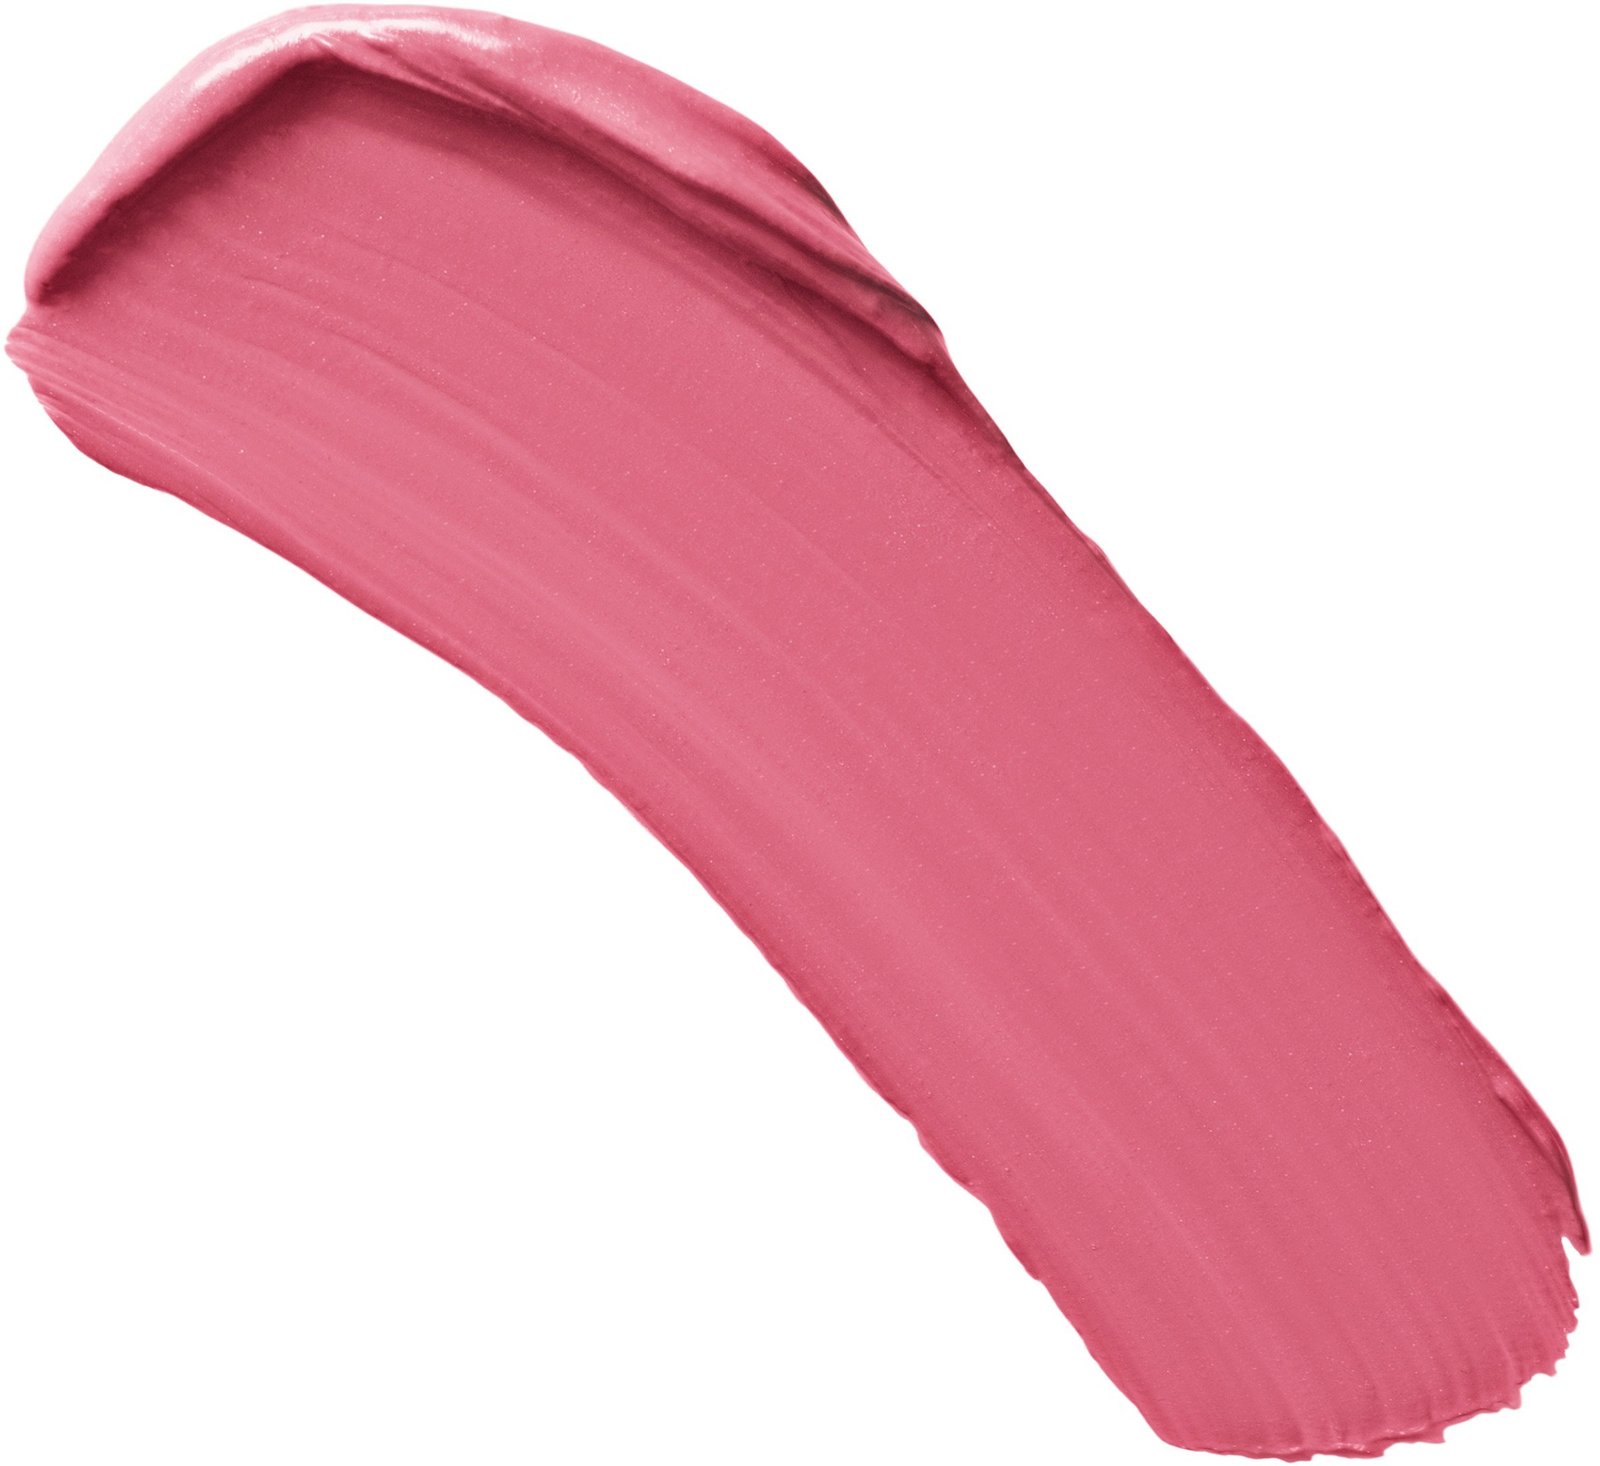 Lumene Natural Glow Multi-stick 2 Fresh Pink 5,8g